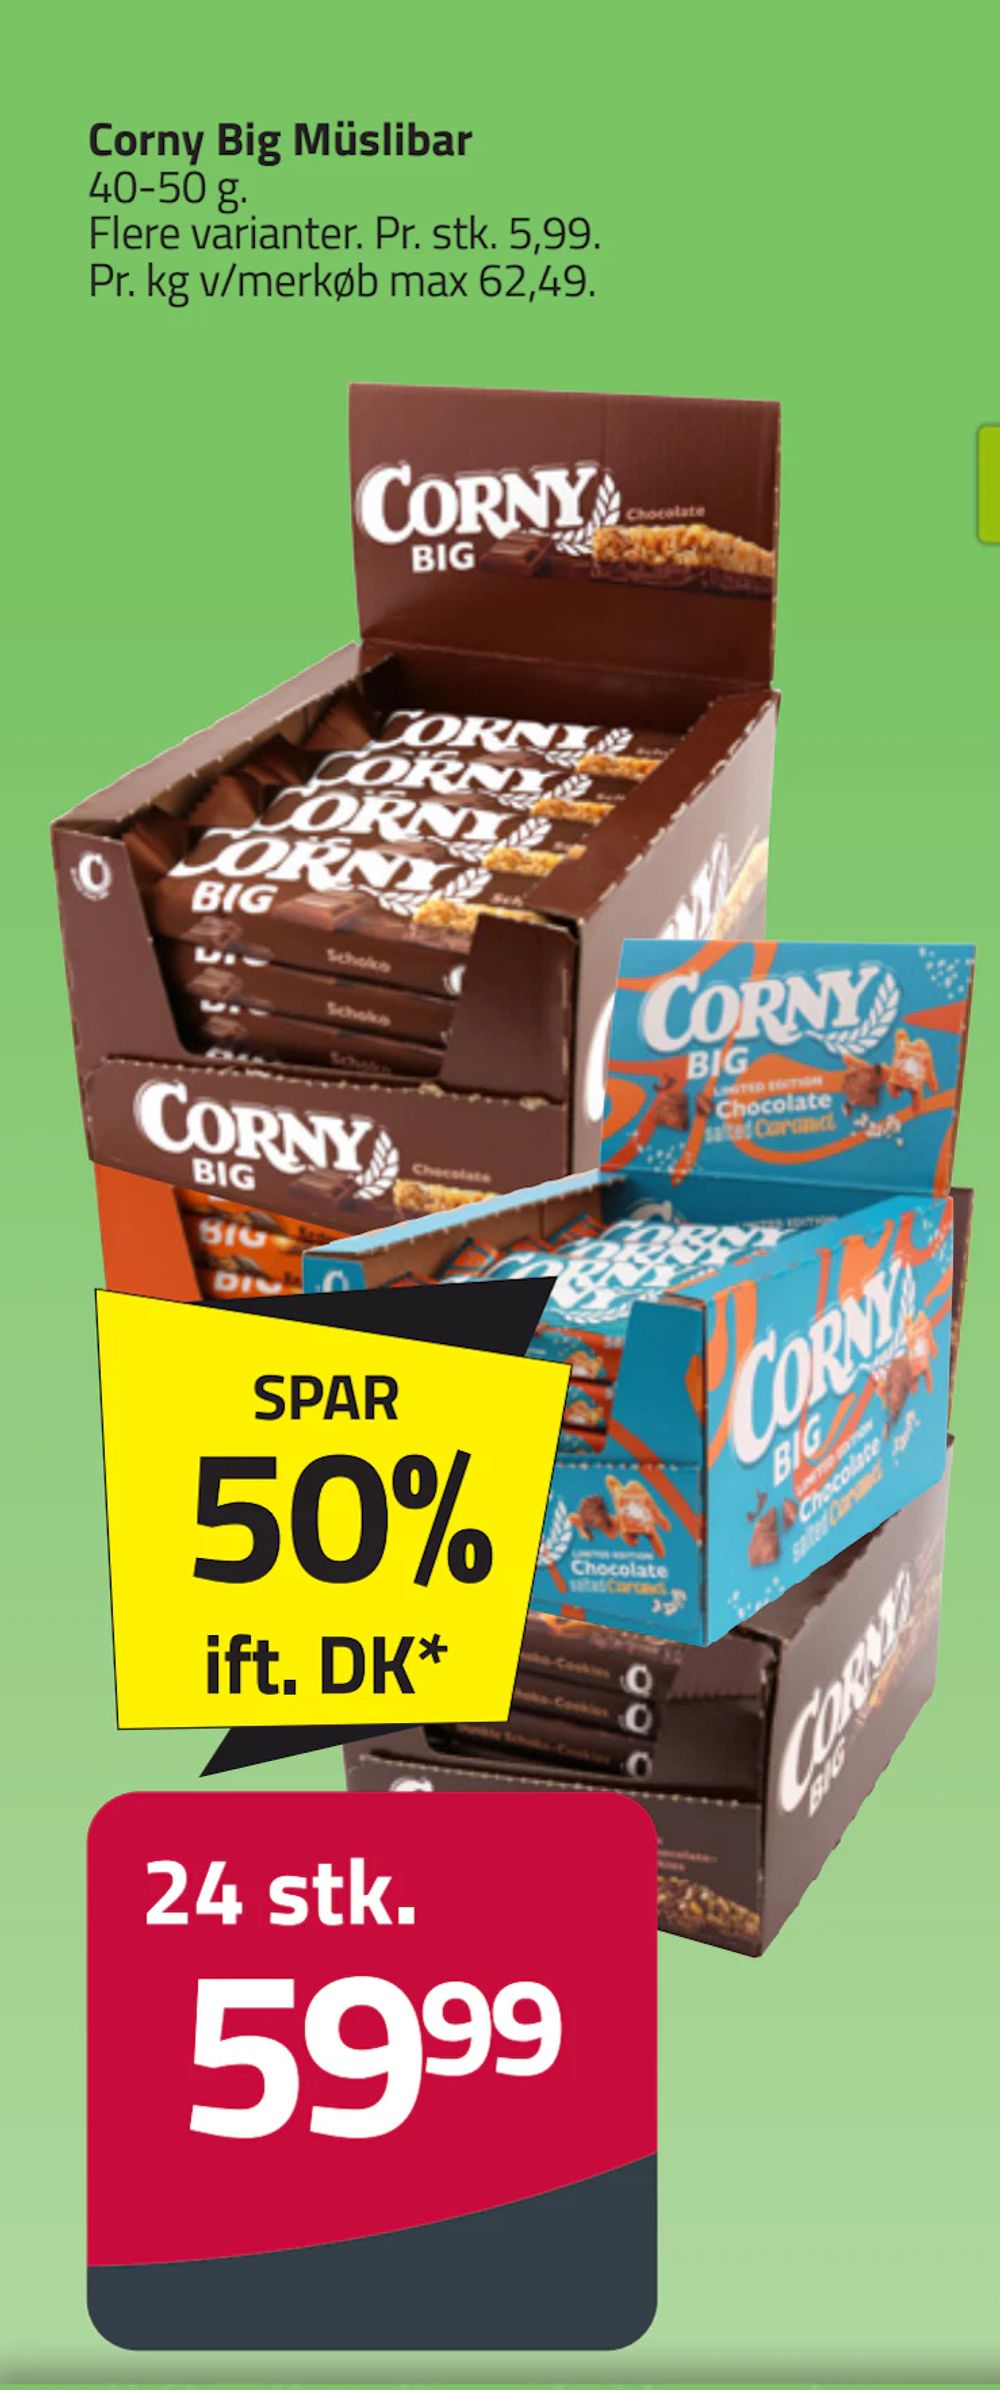 Tilbud på Corny Big Müslibar fra Fleggaard til 59,99 kr.